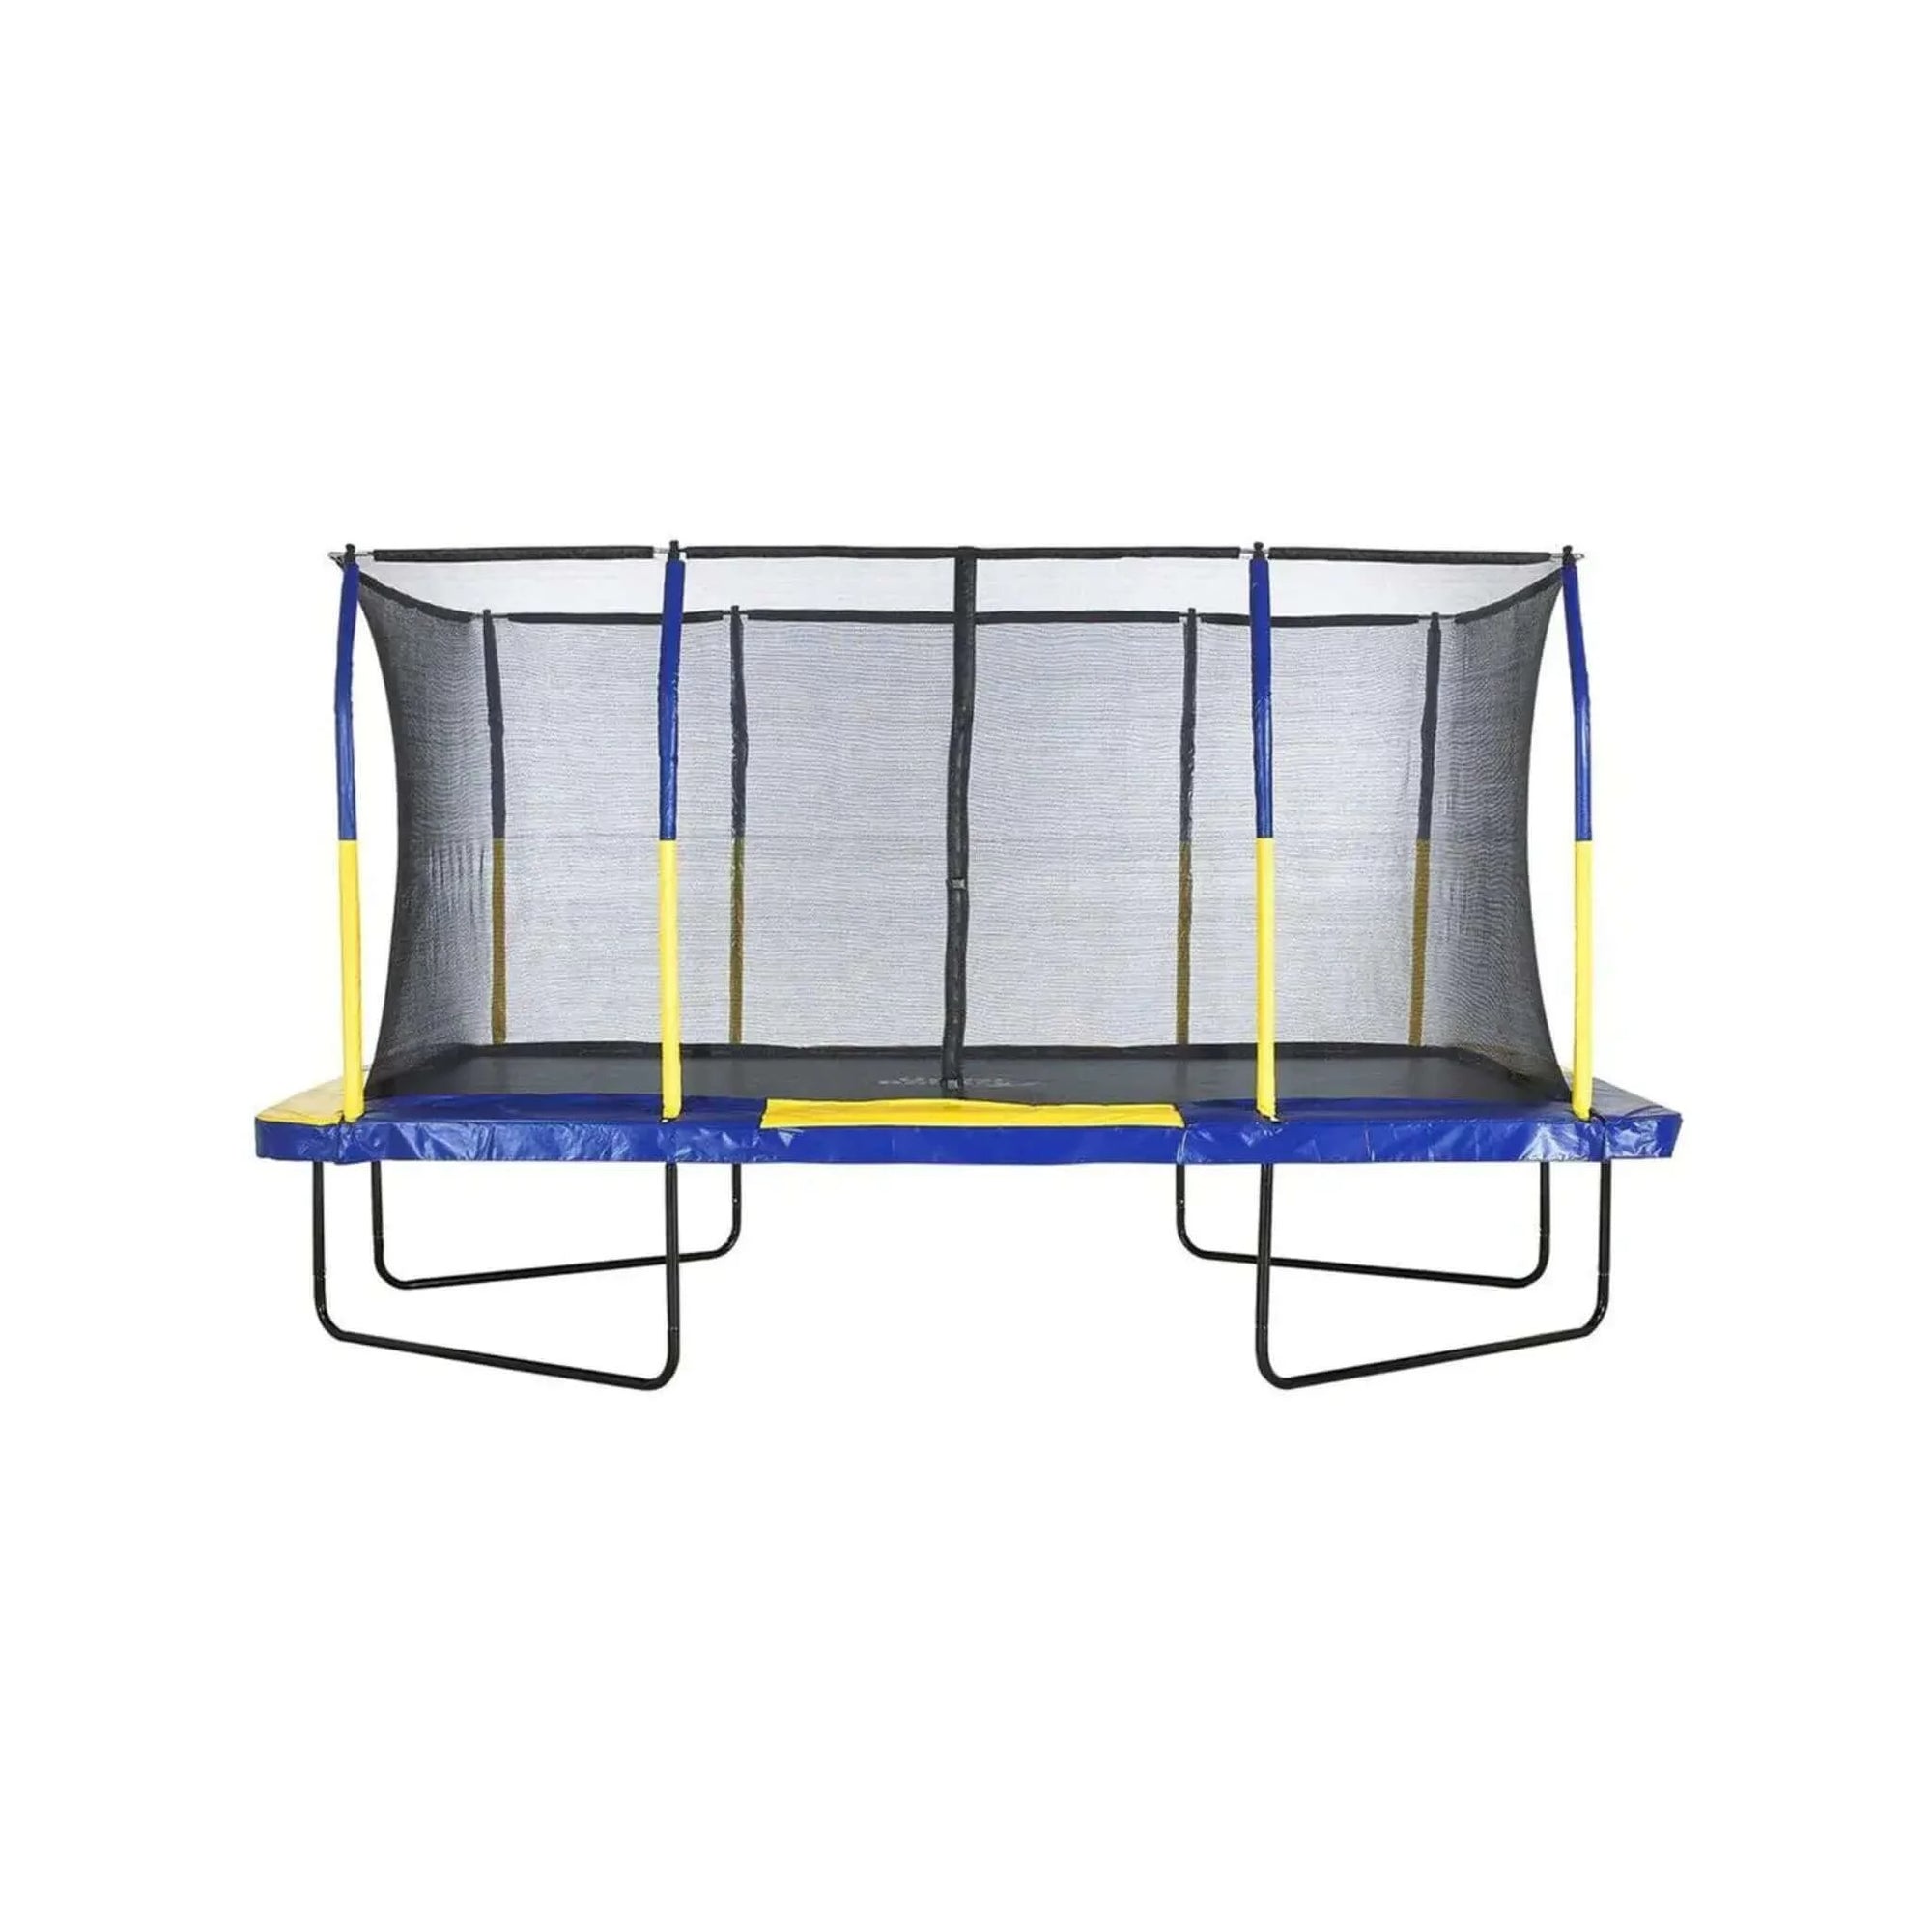 Machrus Upper Bounce 9' X 15' Rectangular Trampoline Set